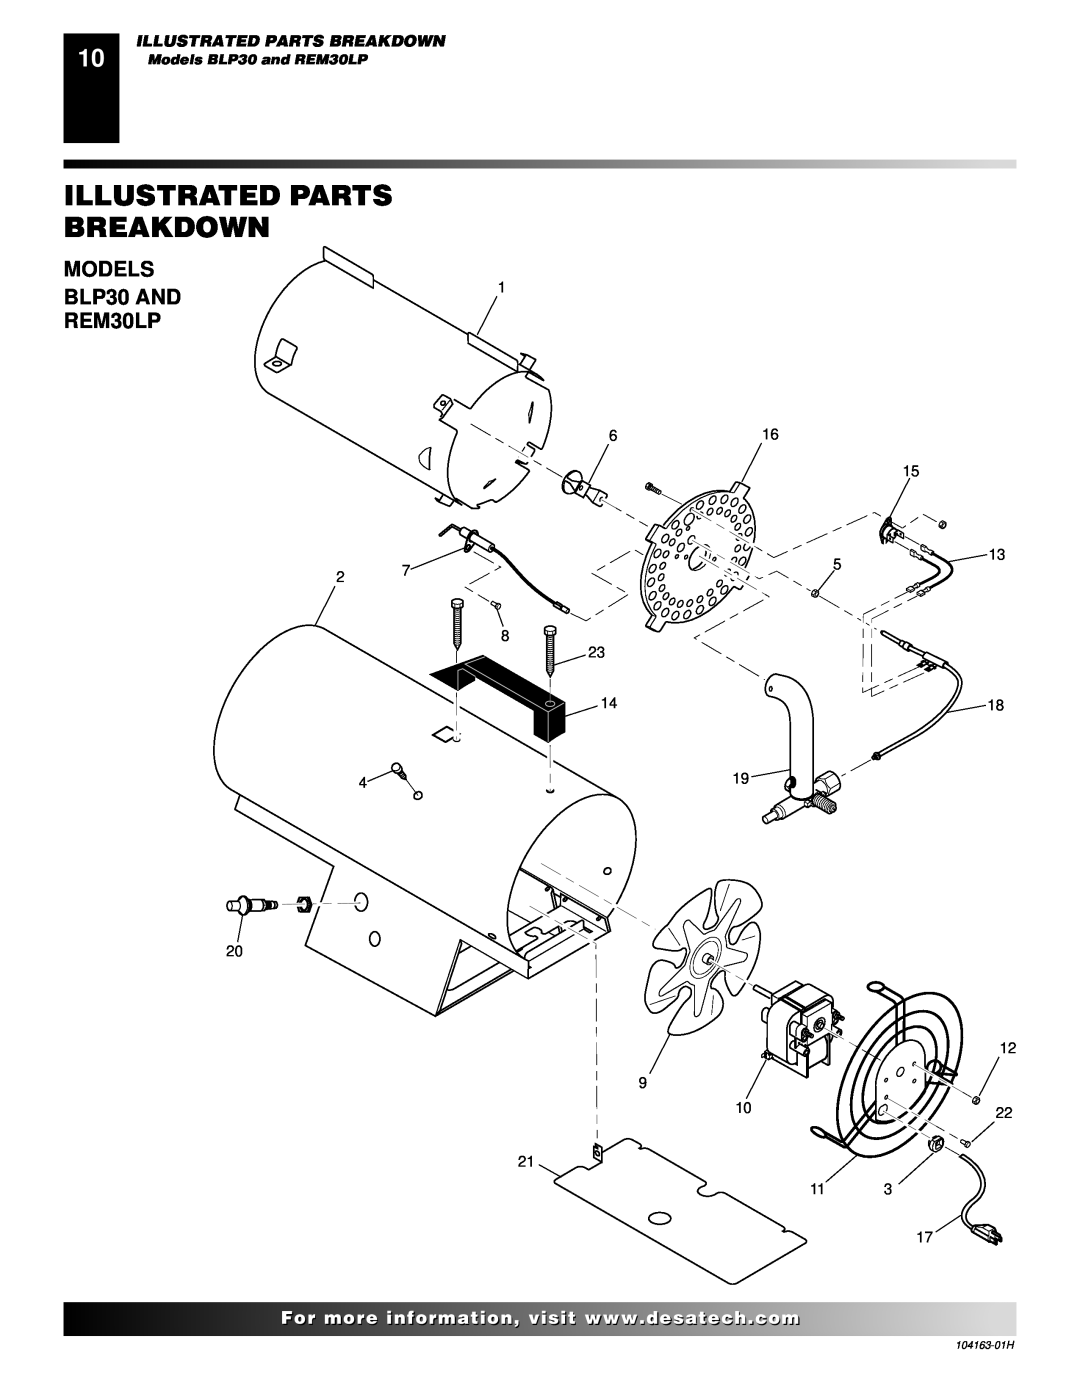 Desa owner manual Illustrated Parts Breakdown, MODELS BLP30 AND REM30LP, Models BLP30 and REM30LP 